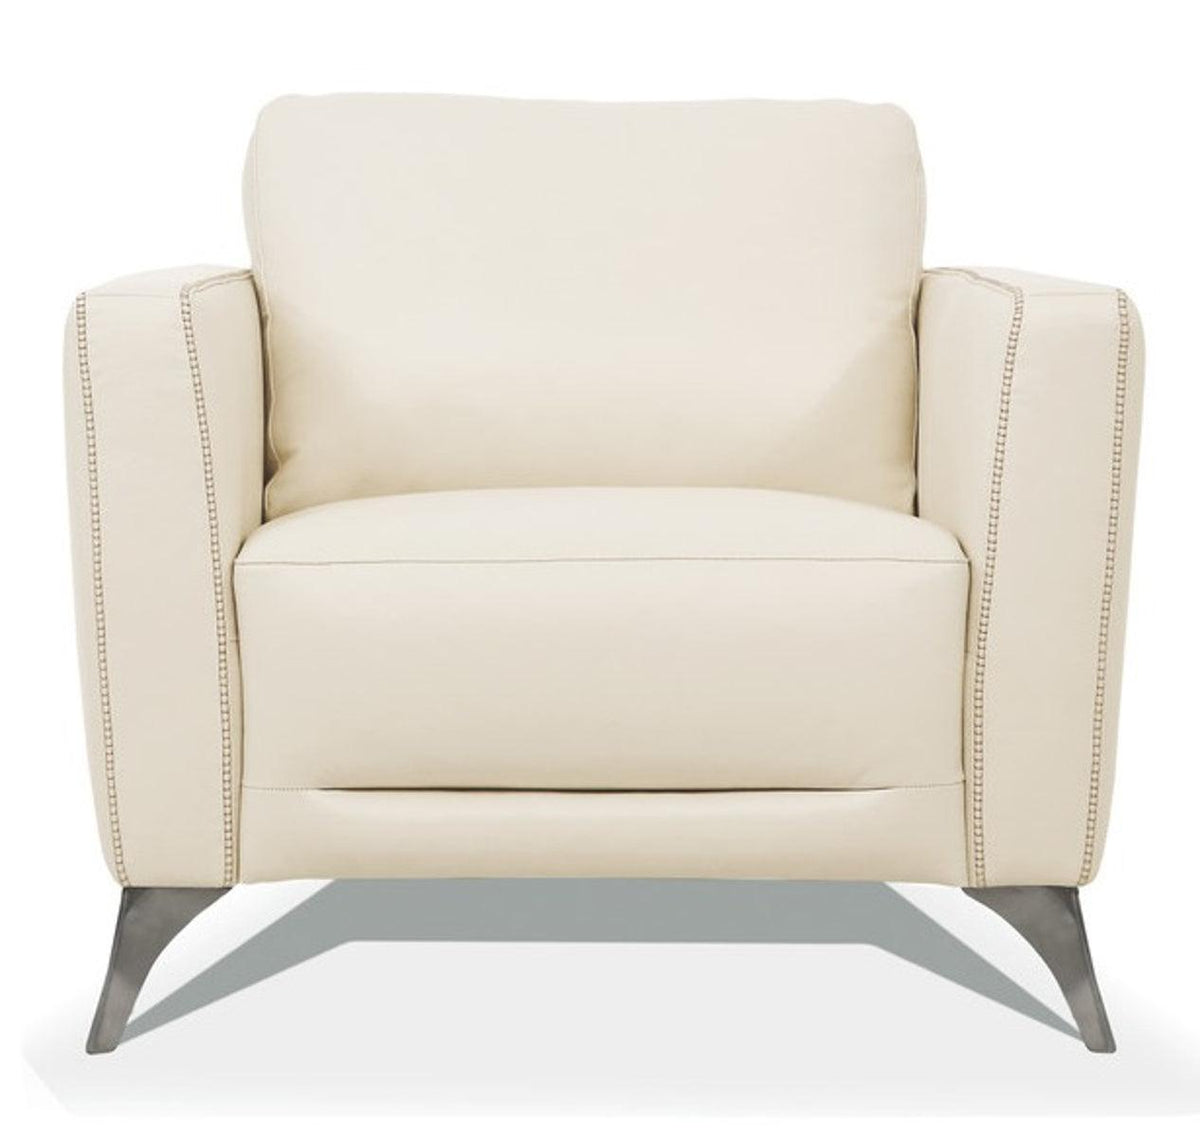 Acme Furniture Malaga Chair in Cream 55007  Half Price Furniture